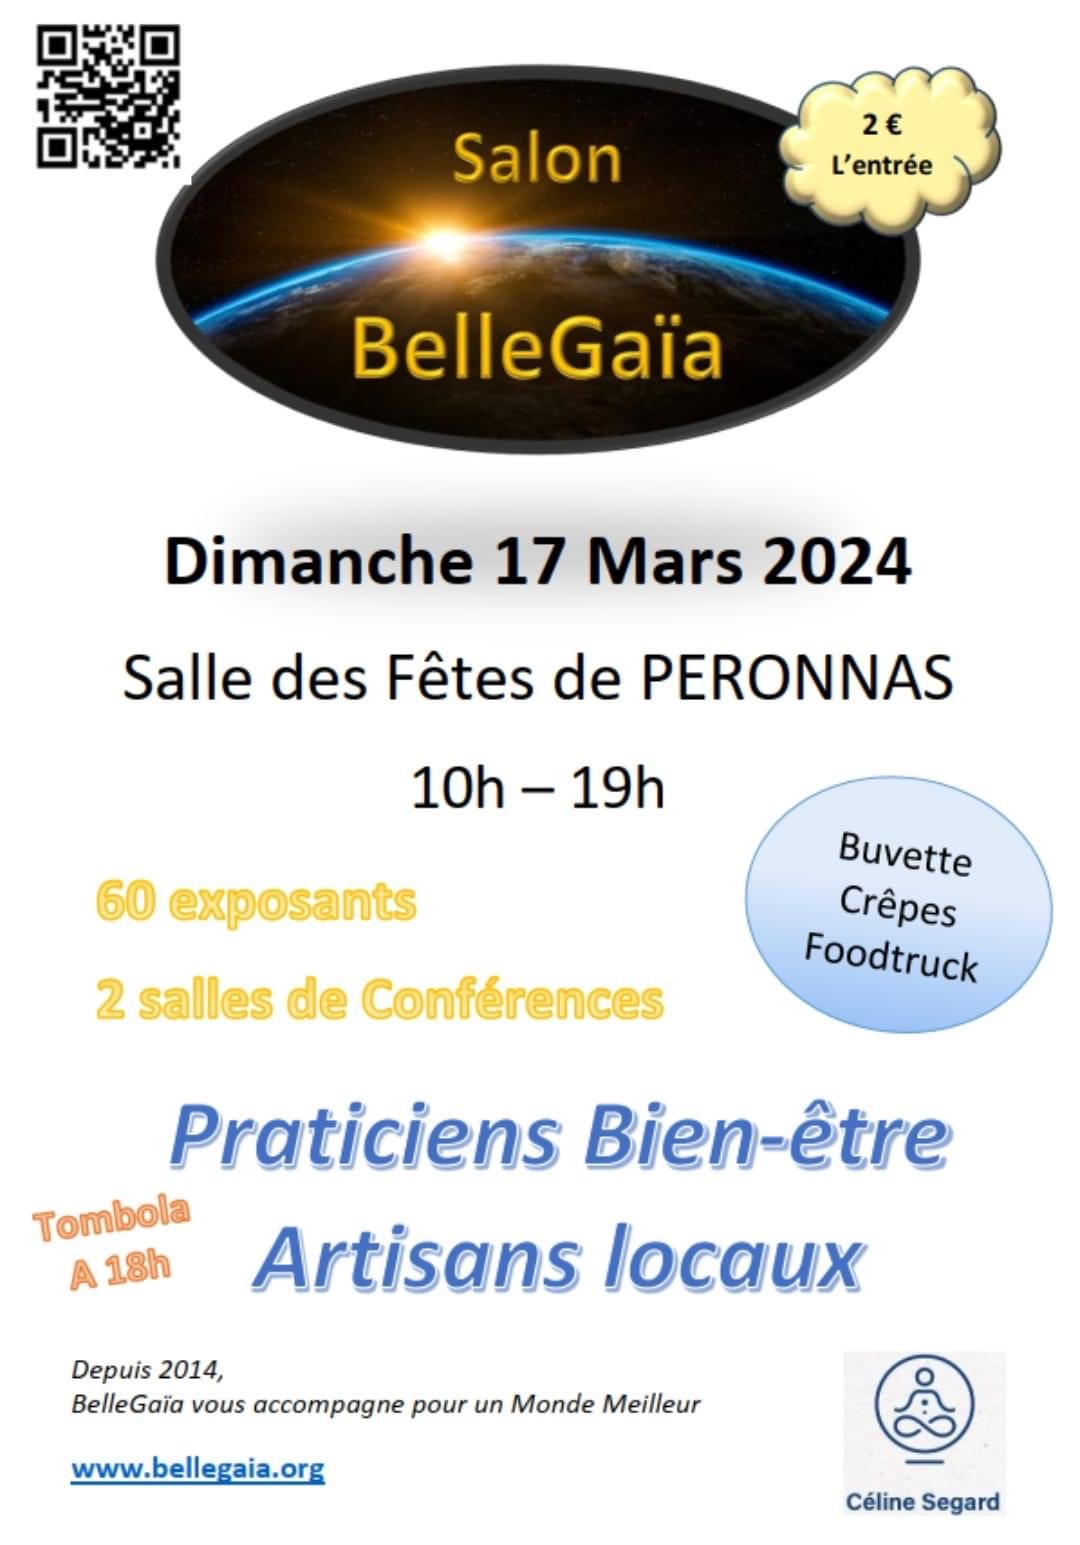 Salon BelleGaïa 17 mars 2024 à Peronnas